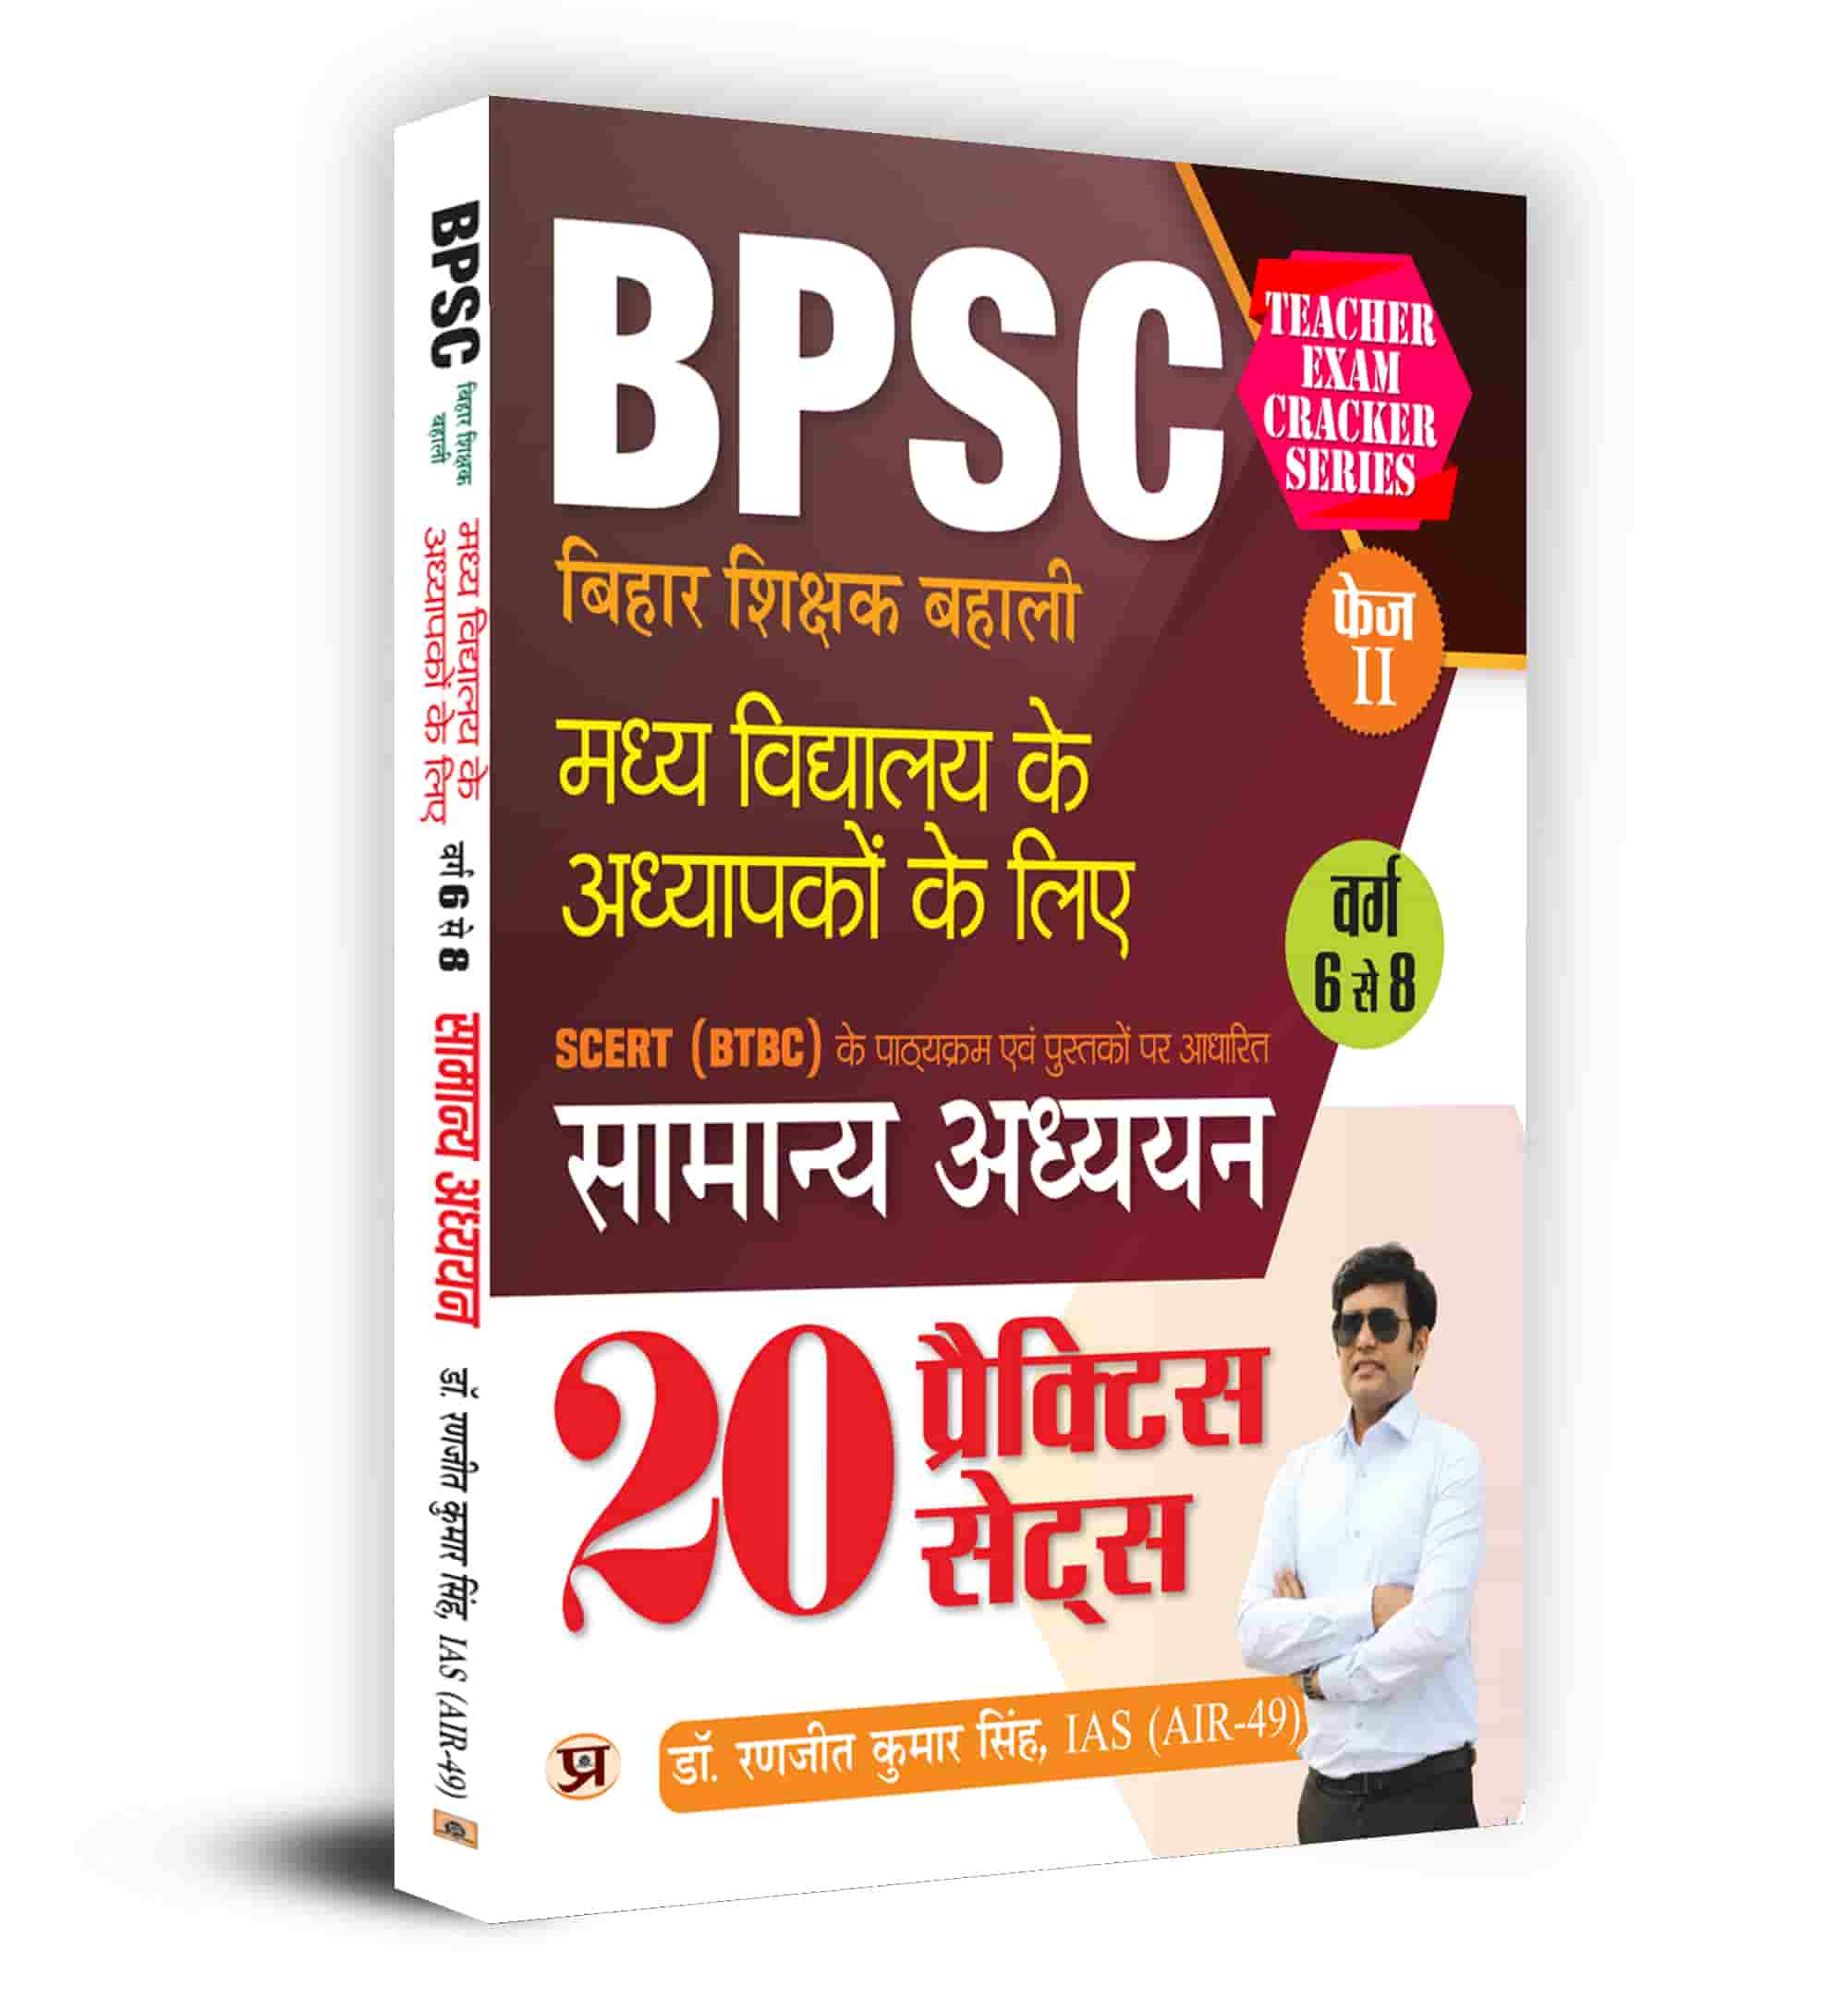 BPSC Bihar Teacher Recruitment Class 6 to 8 Samanaya Adhyayan (General Studies) 20 Practice Sets Book in Hindi